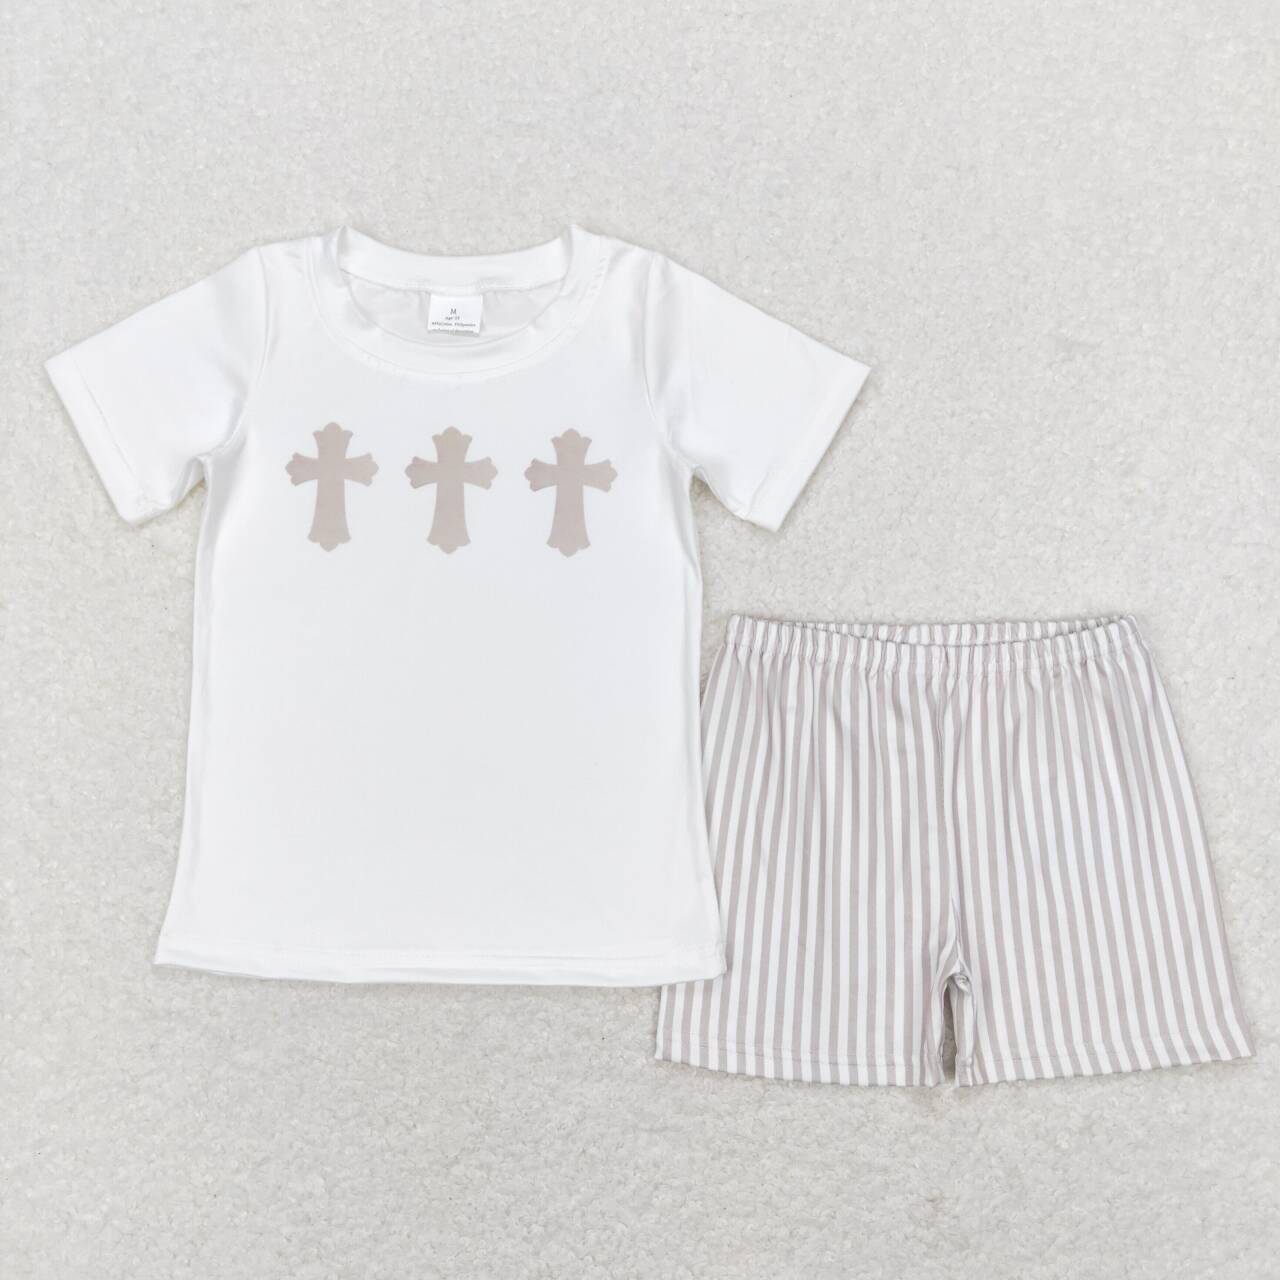 BSSO0354 Cross Khaki Stripes Shorts Boys Easter Clothes Set